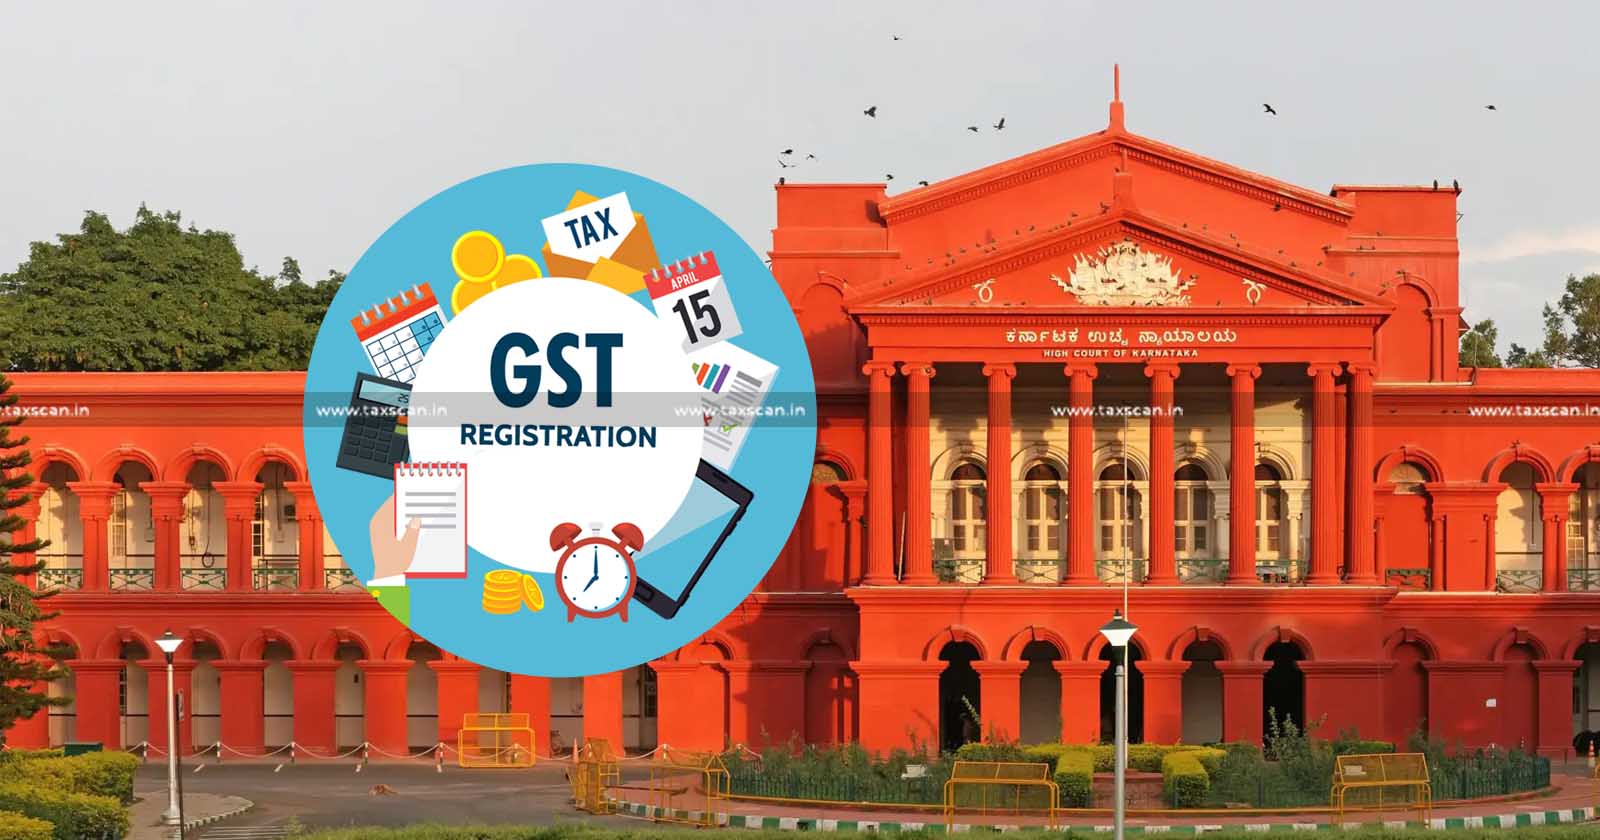 Cancellation of GST Registration - Tax Returns - Karnataka HC - Revocation Application as per CBIC Notification - TAXSCAN